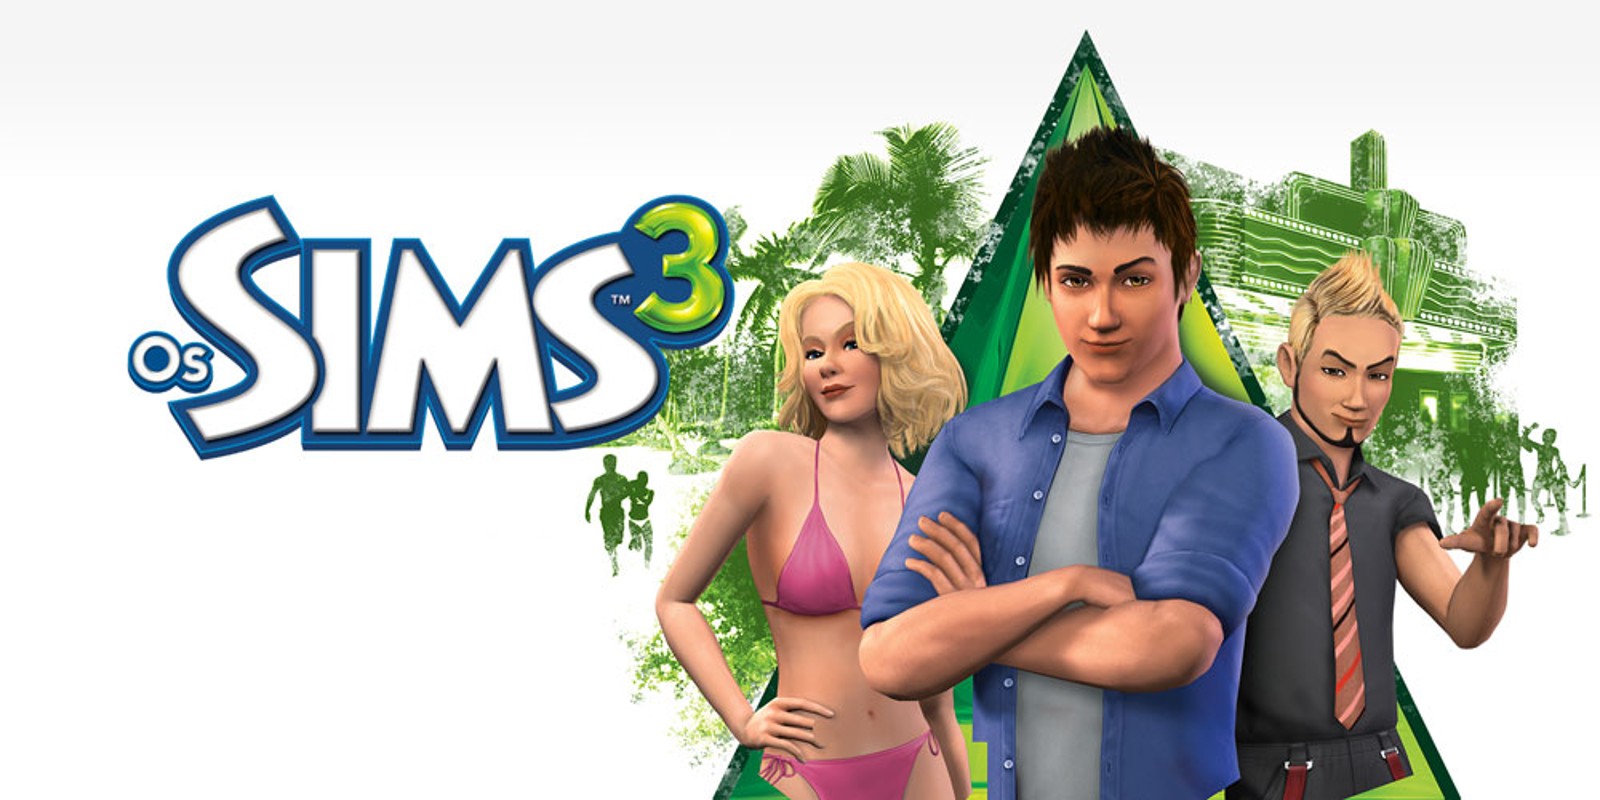 Os Sims 3